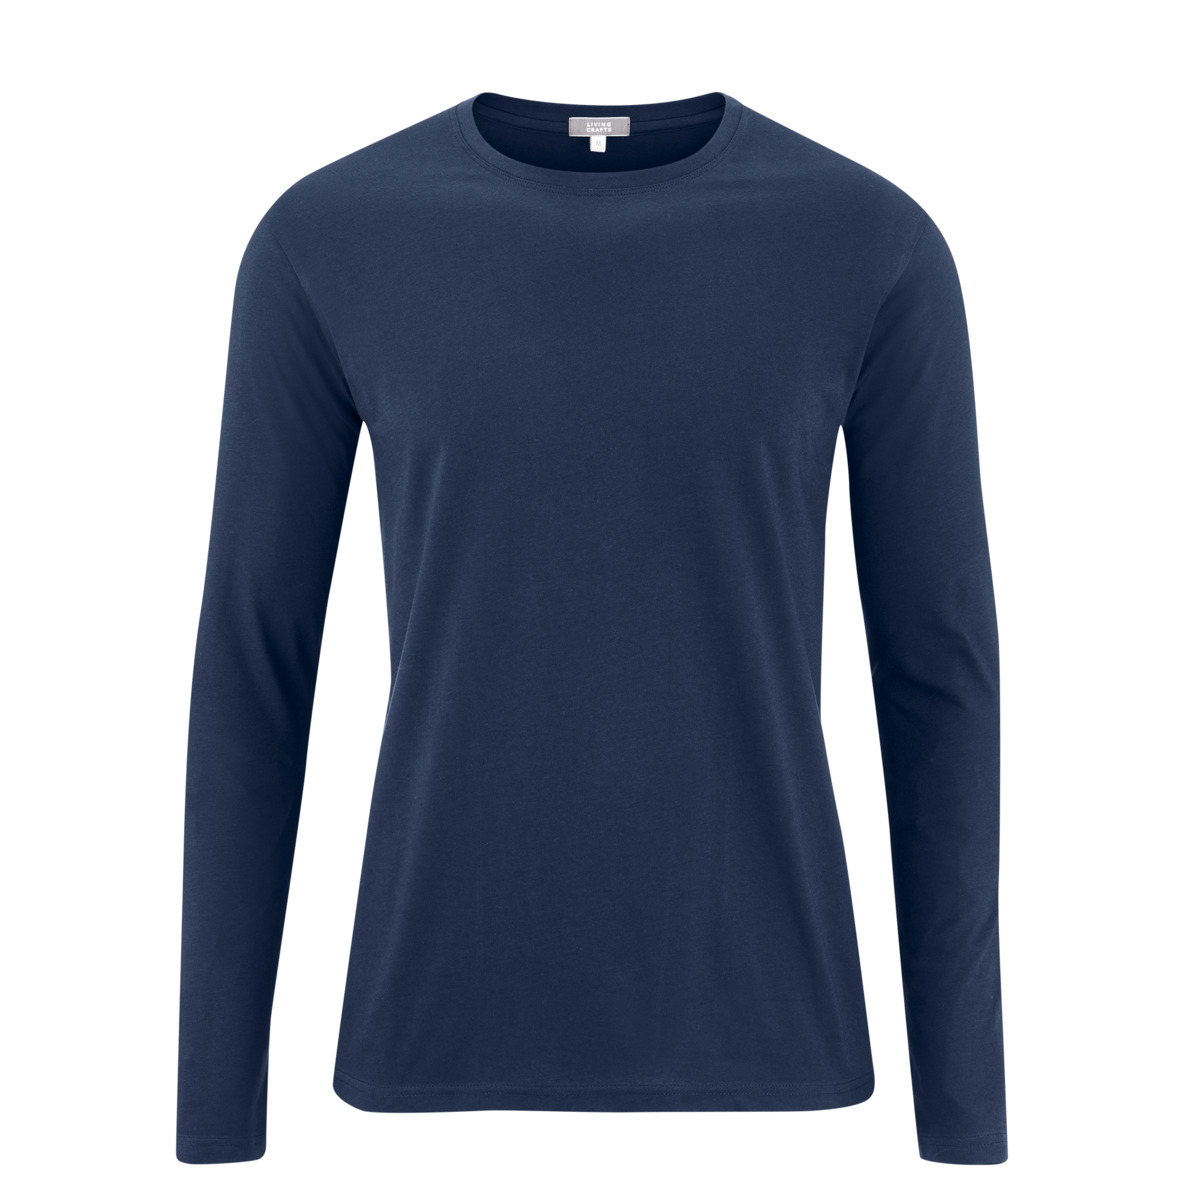 Blue Long-sleeved shirt, FRANK